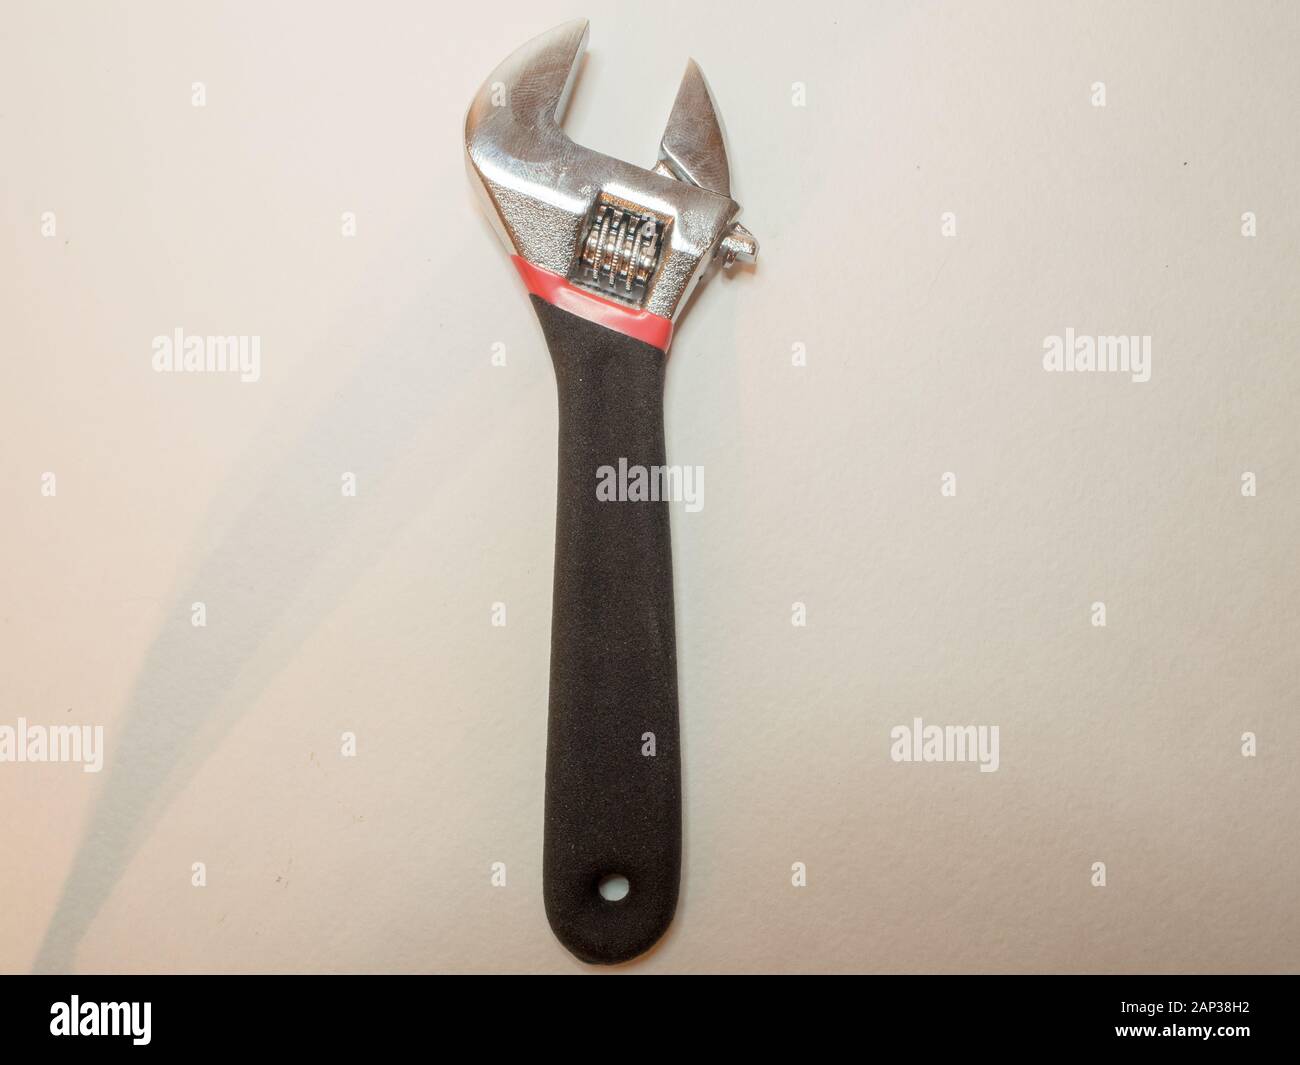 Adjustable wrench Stock Photo